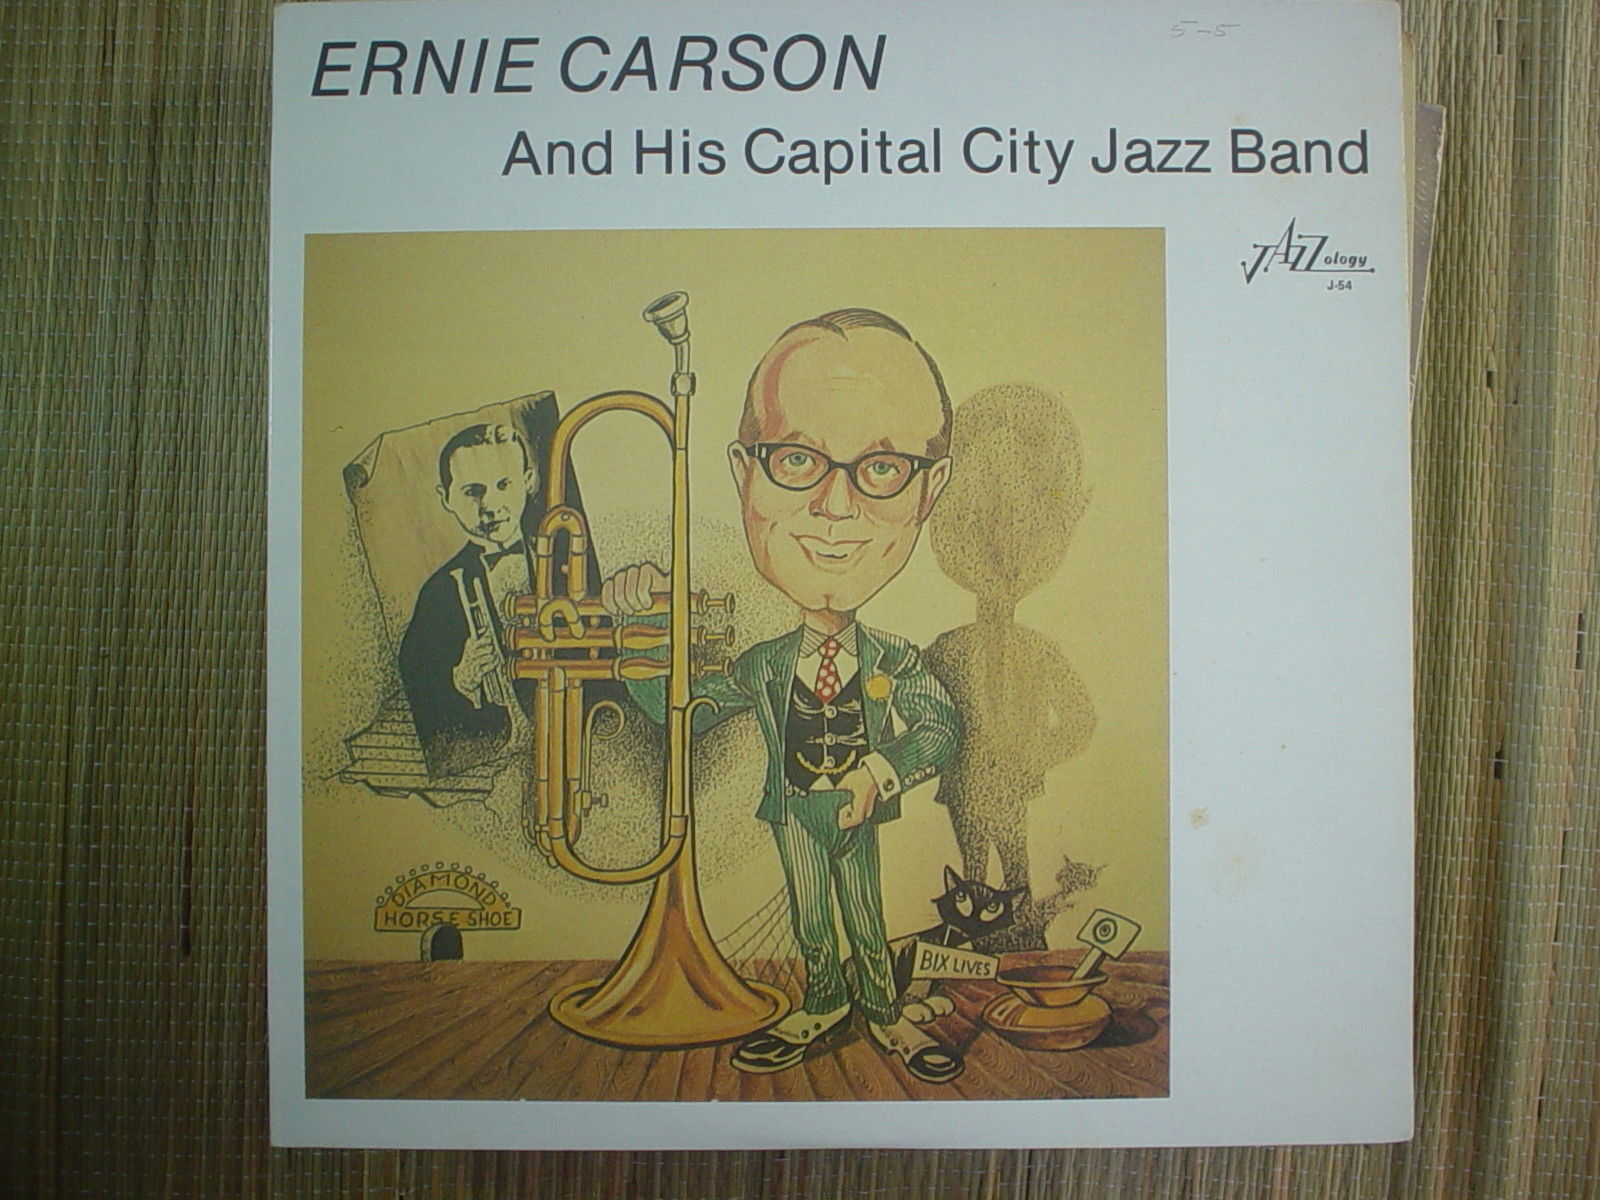 ERNIE CARSON - Ernie Carson And His Capitol City Jazz Band cover 